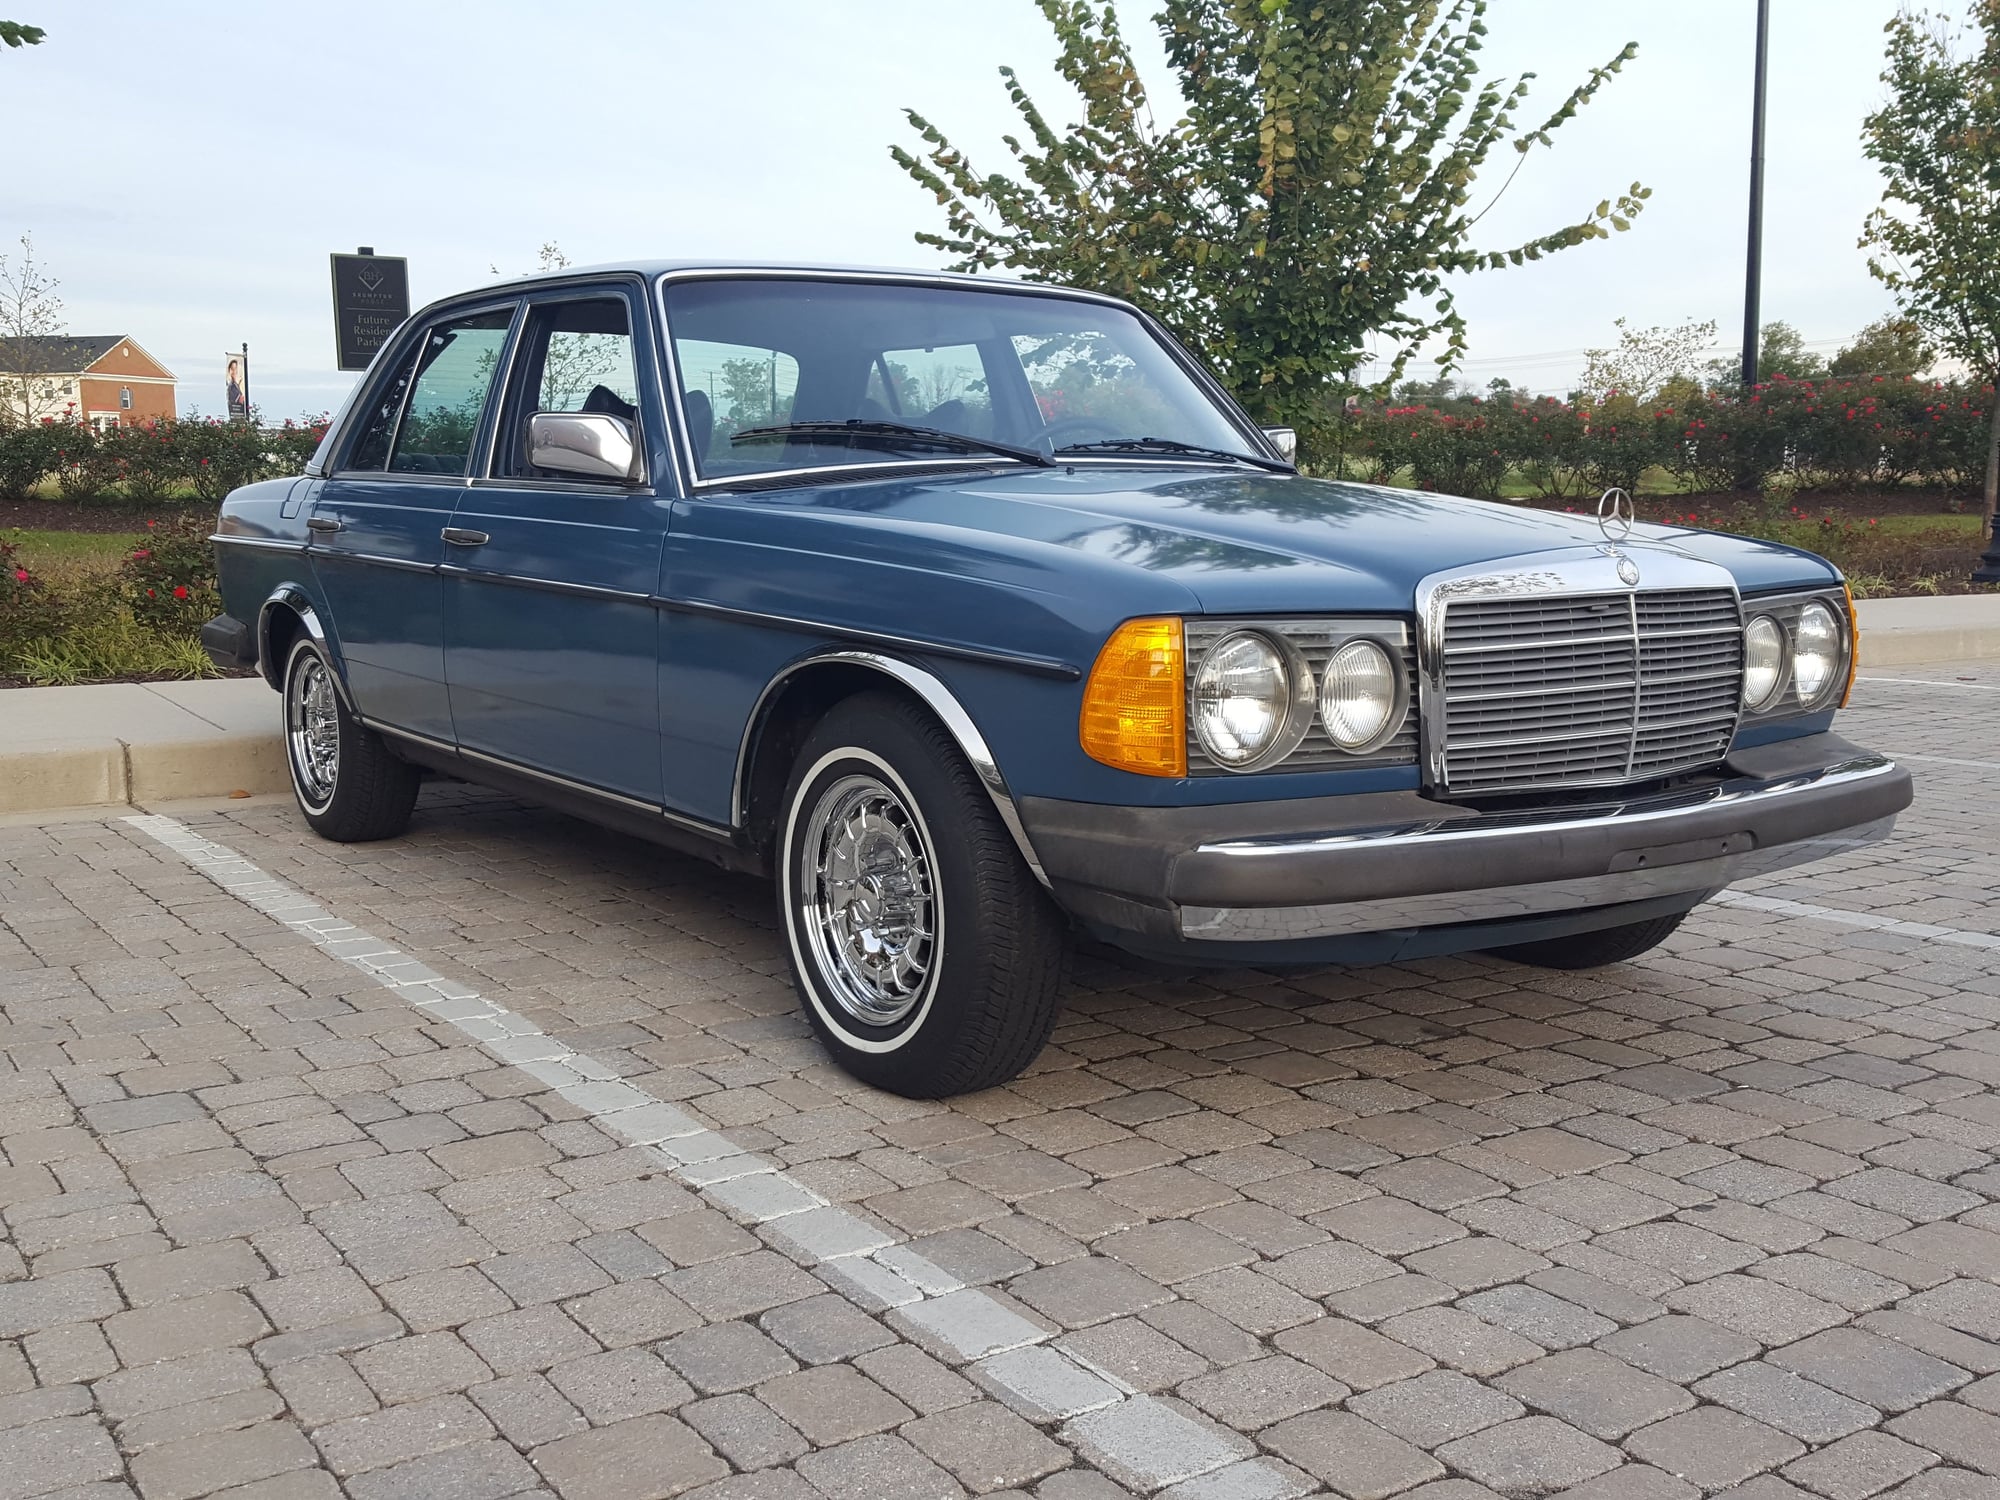 1978 Mercedes-Benz 240D - 1978 Mercedes 240d w123 - Used - VIN 1xxxx0000xx000000 - 160,000 Miles - 4 cyl - 2WD - Automatic - Sedan - Blue - Elkridge, MD 21075, United States